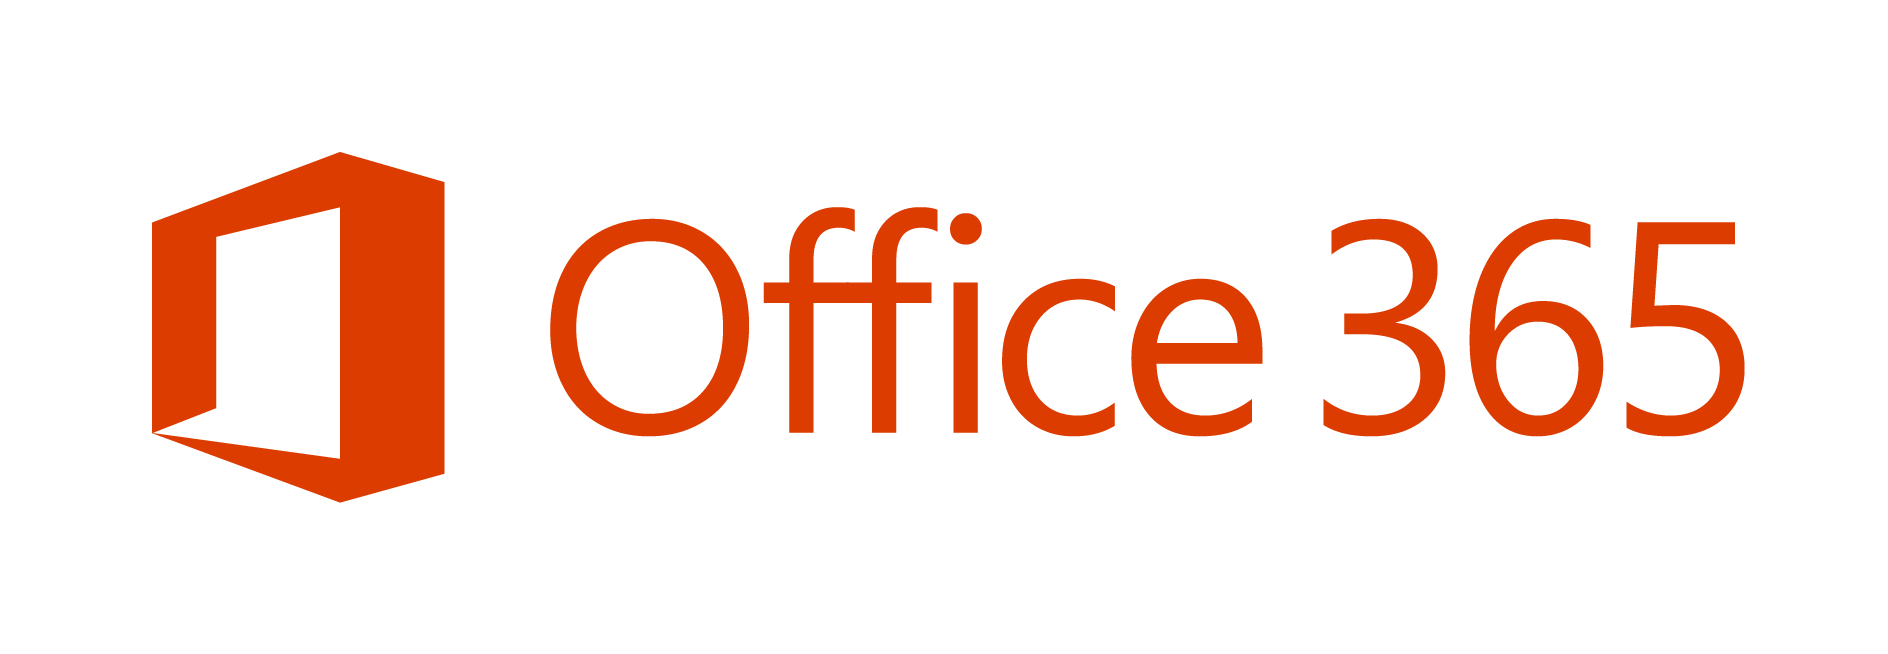 office365 logo v2